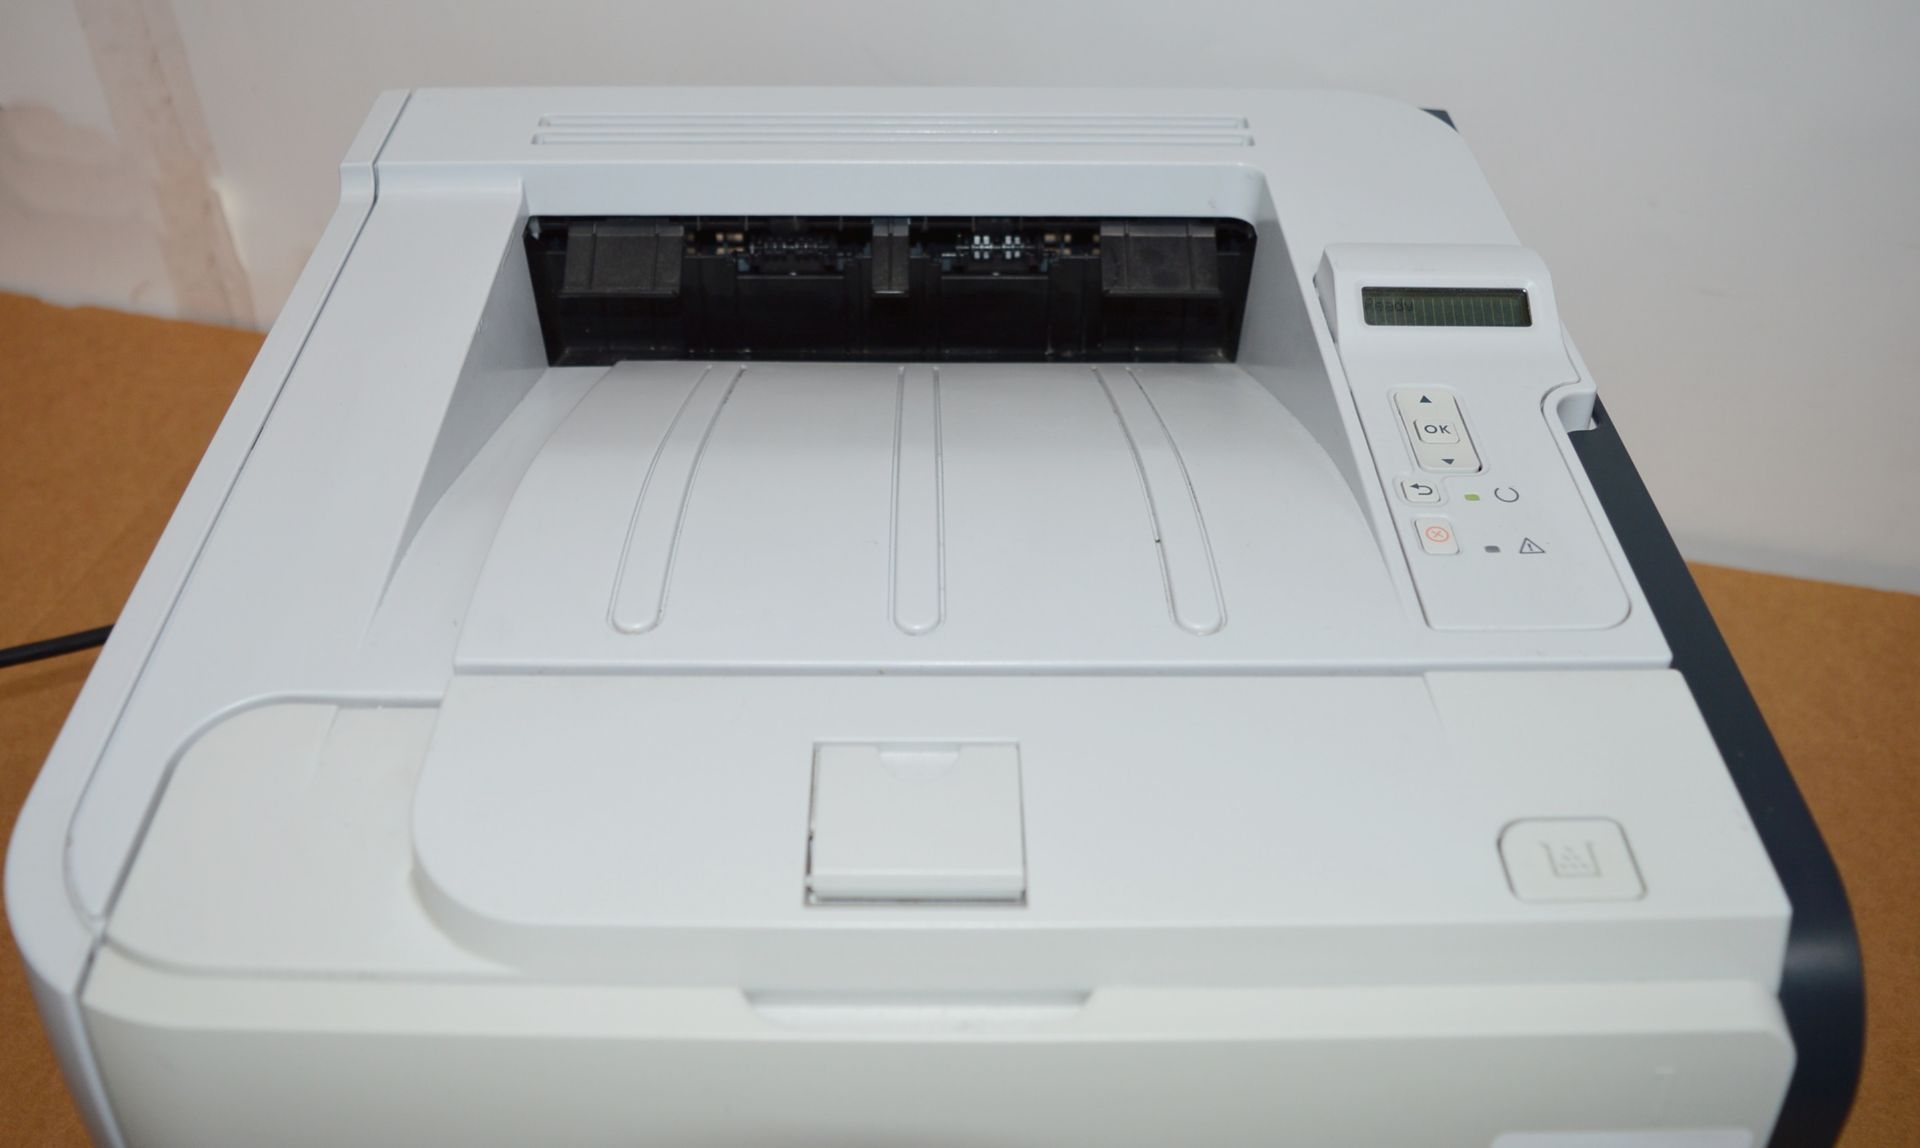 1 x HP Laserjet P2055 Desktop Laser Printer - Good Working Order - Includes Two Toners - CL010 - Ref - Image 5 of 9